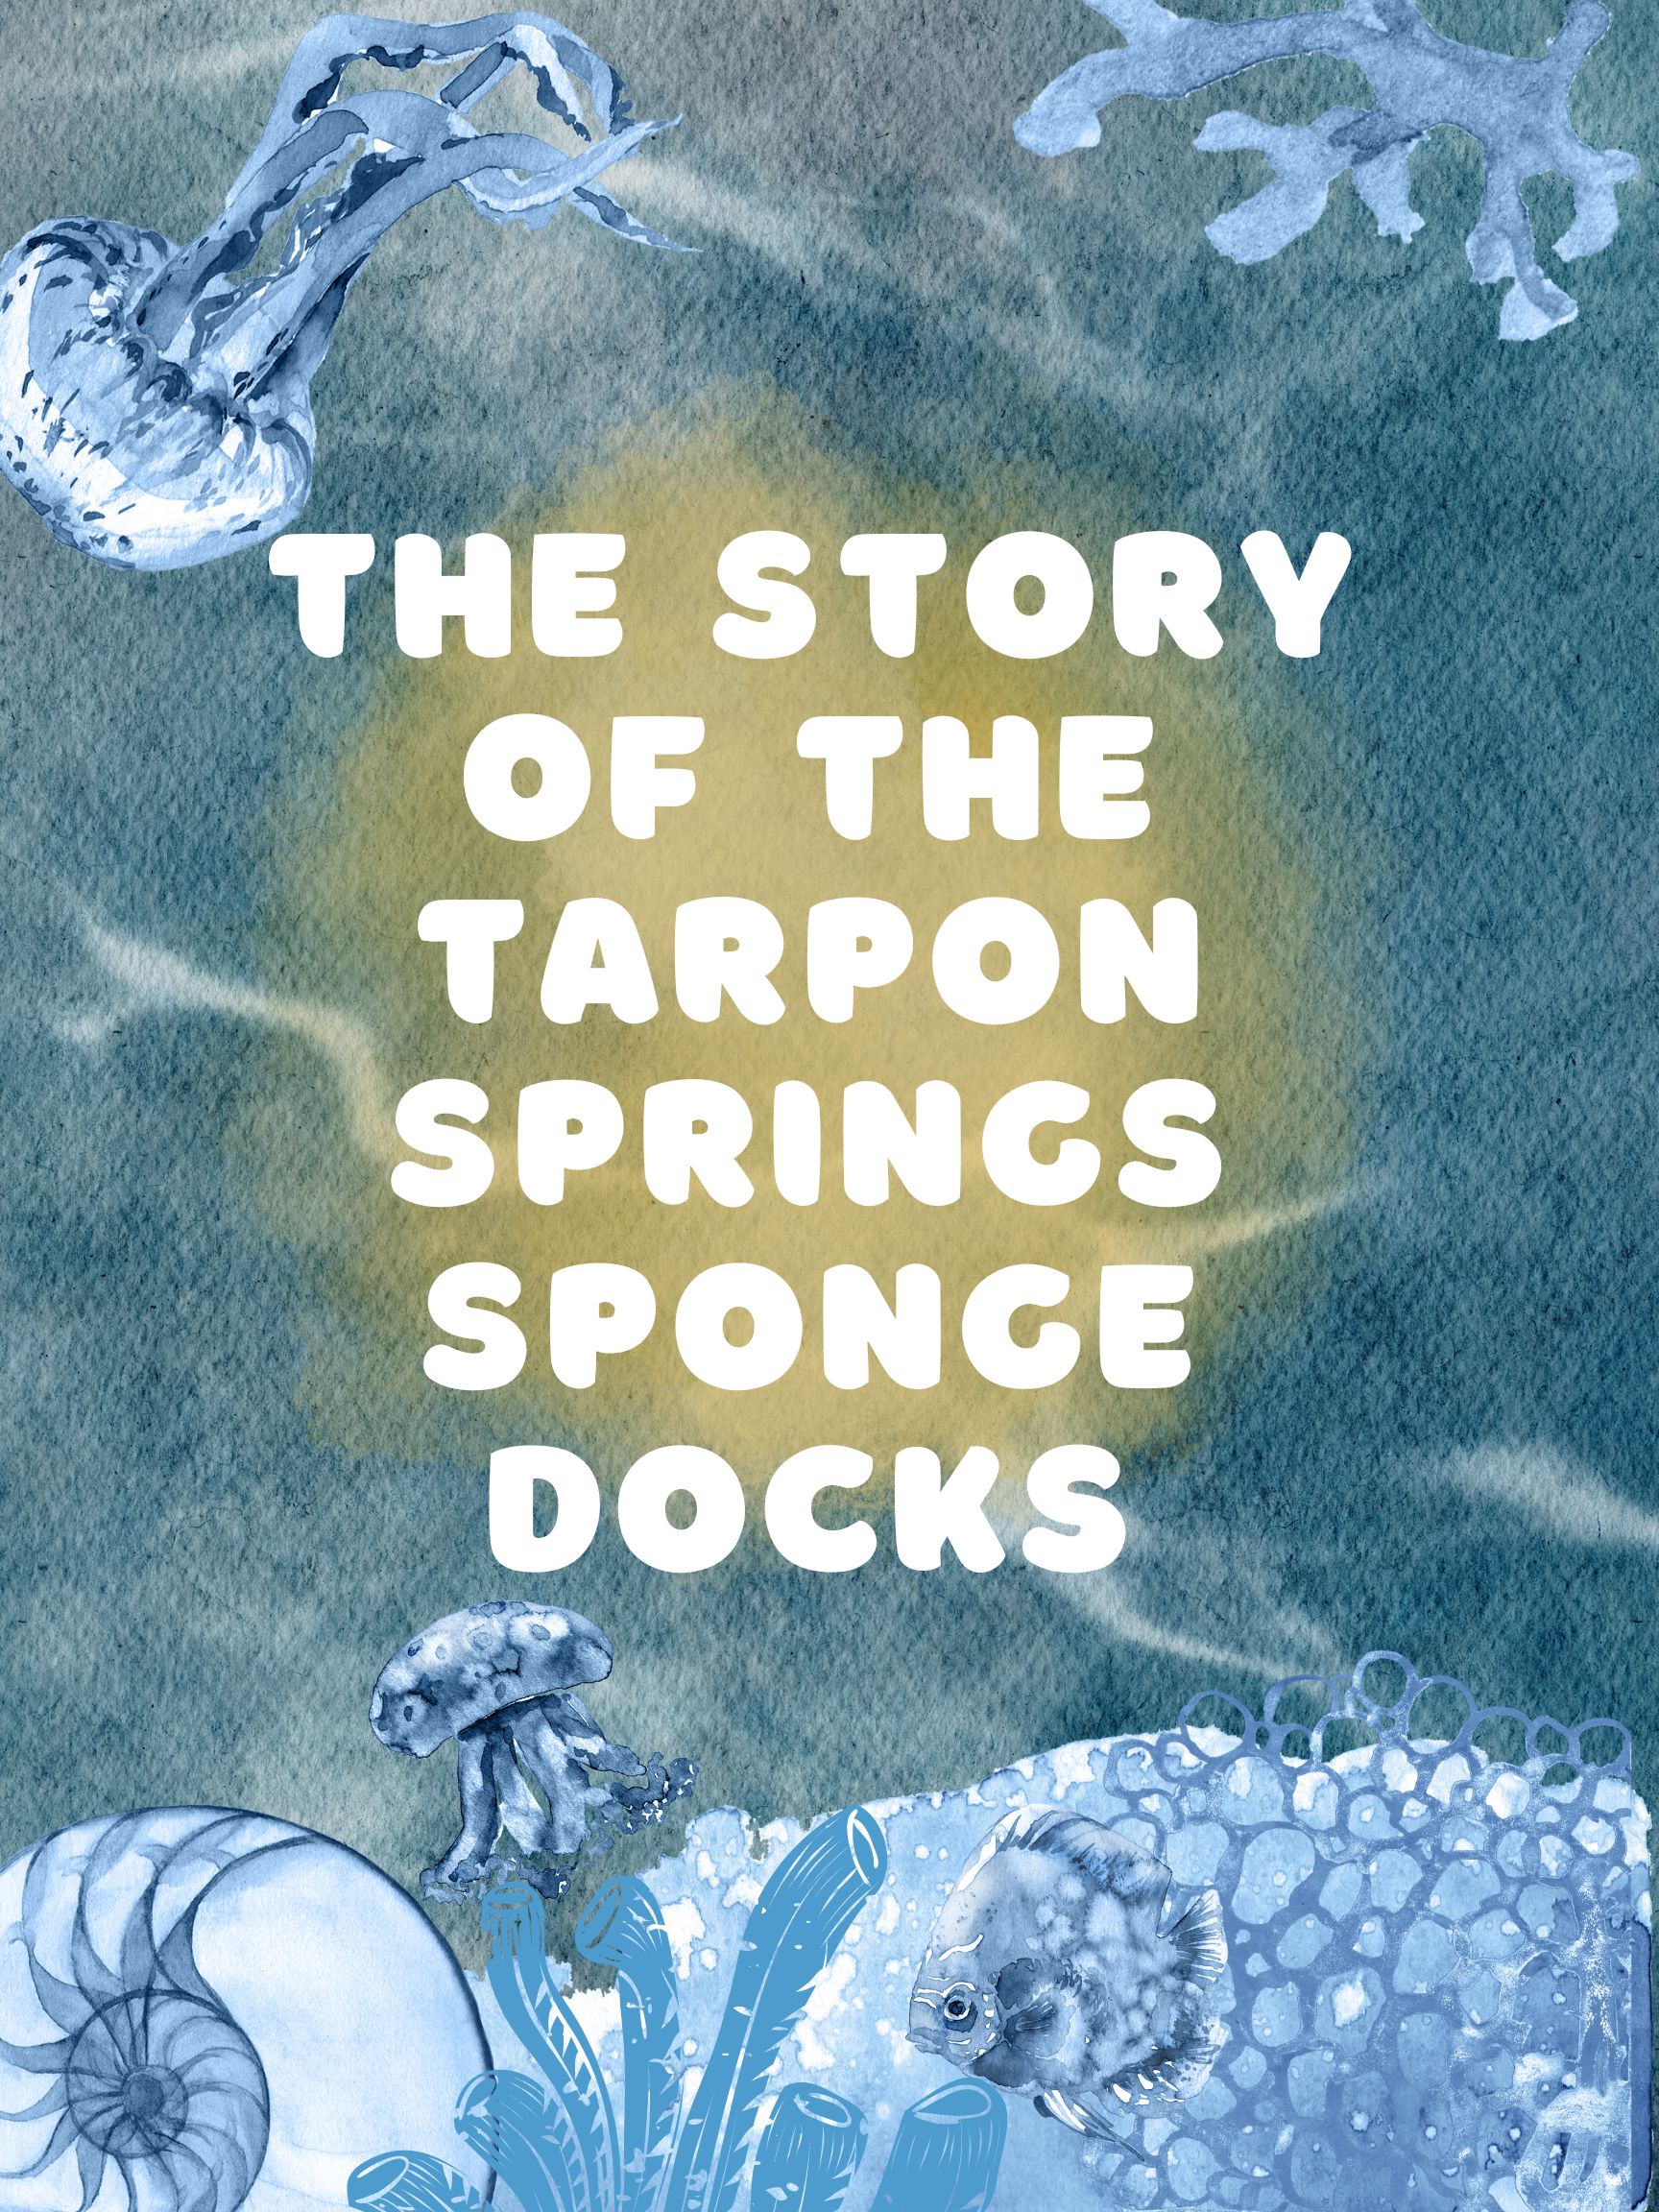 The Story of Tarpon Springs Sponge Docks